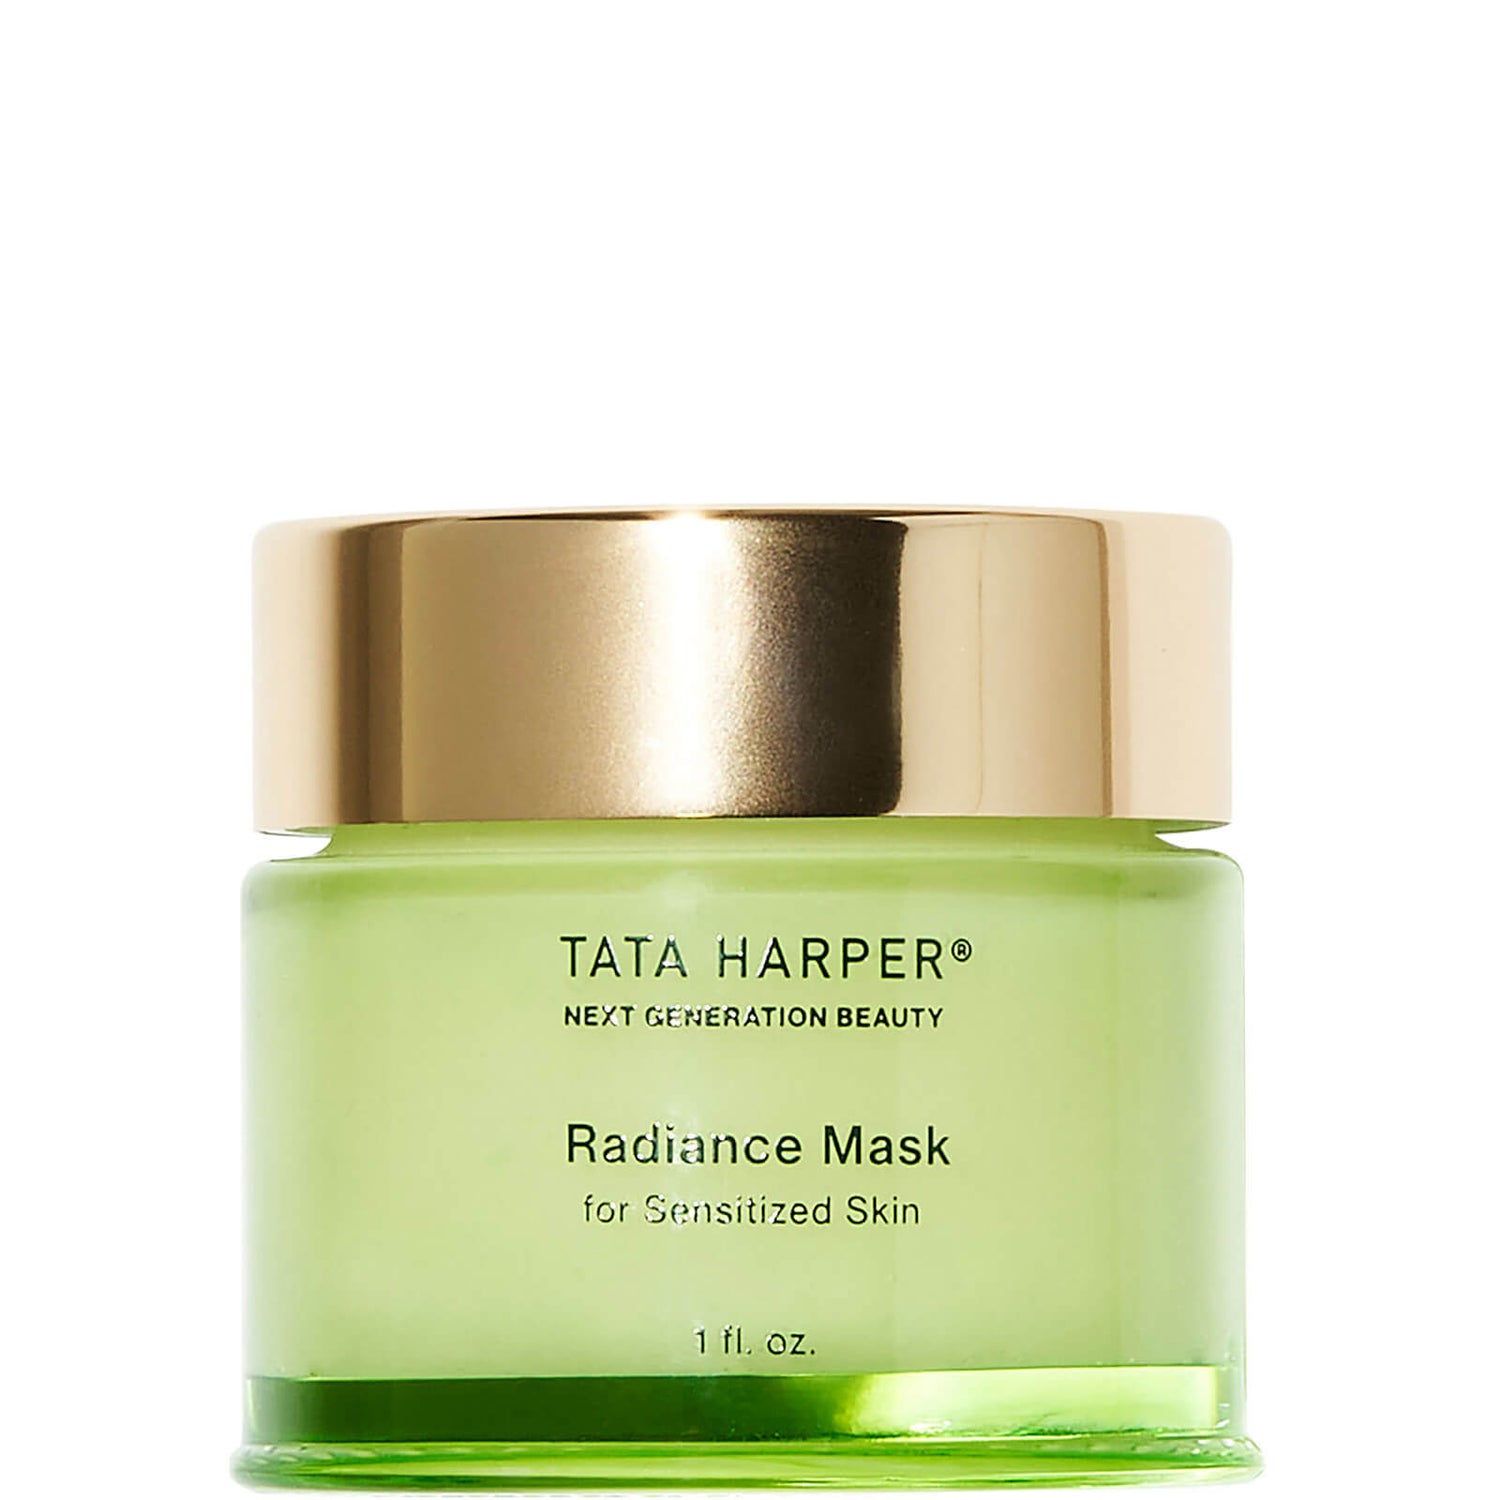 Tata Harper Radiance Mask